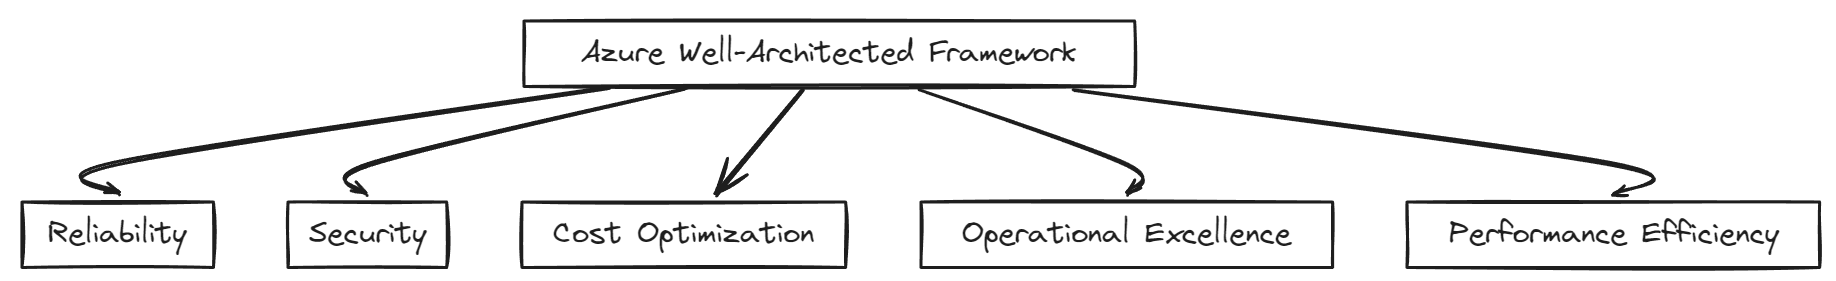 Azure Well-Architected Framework